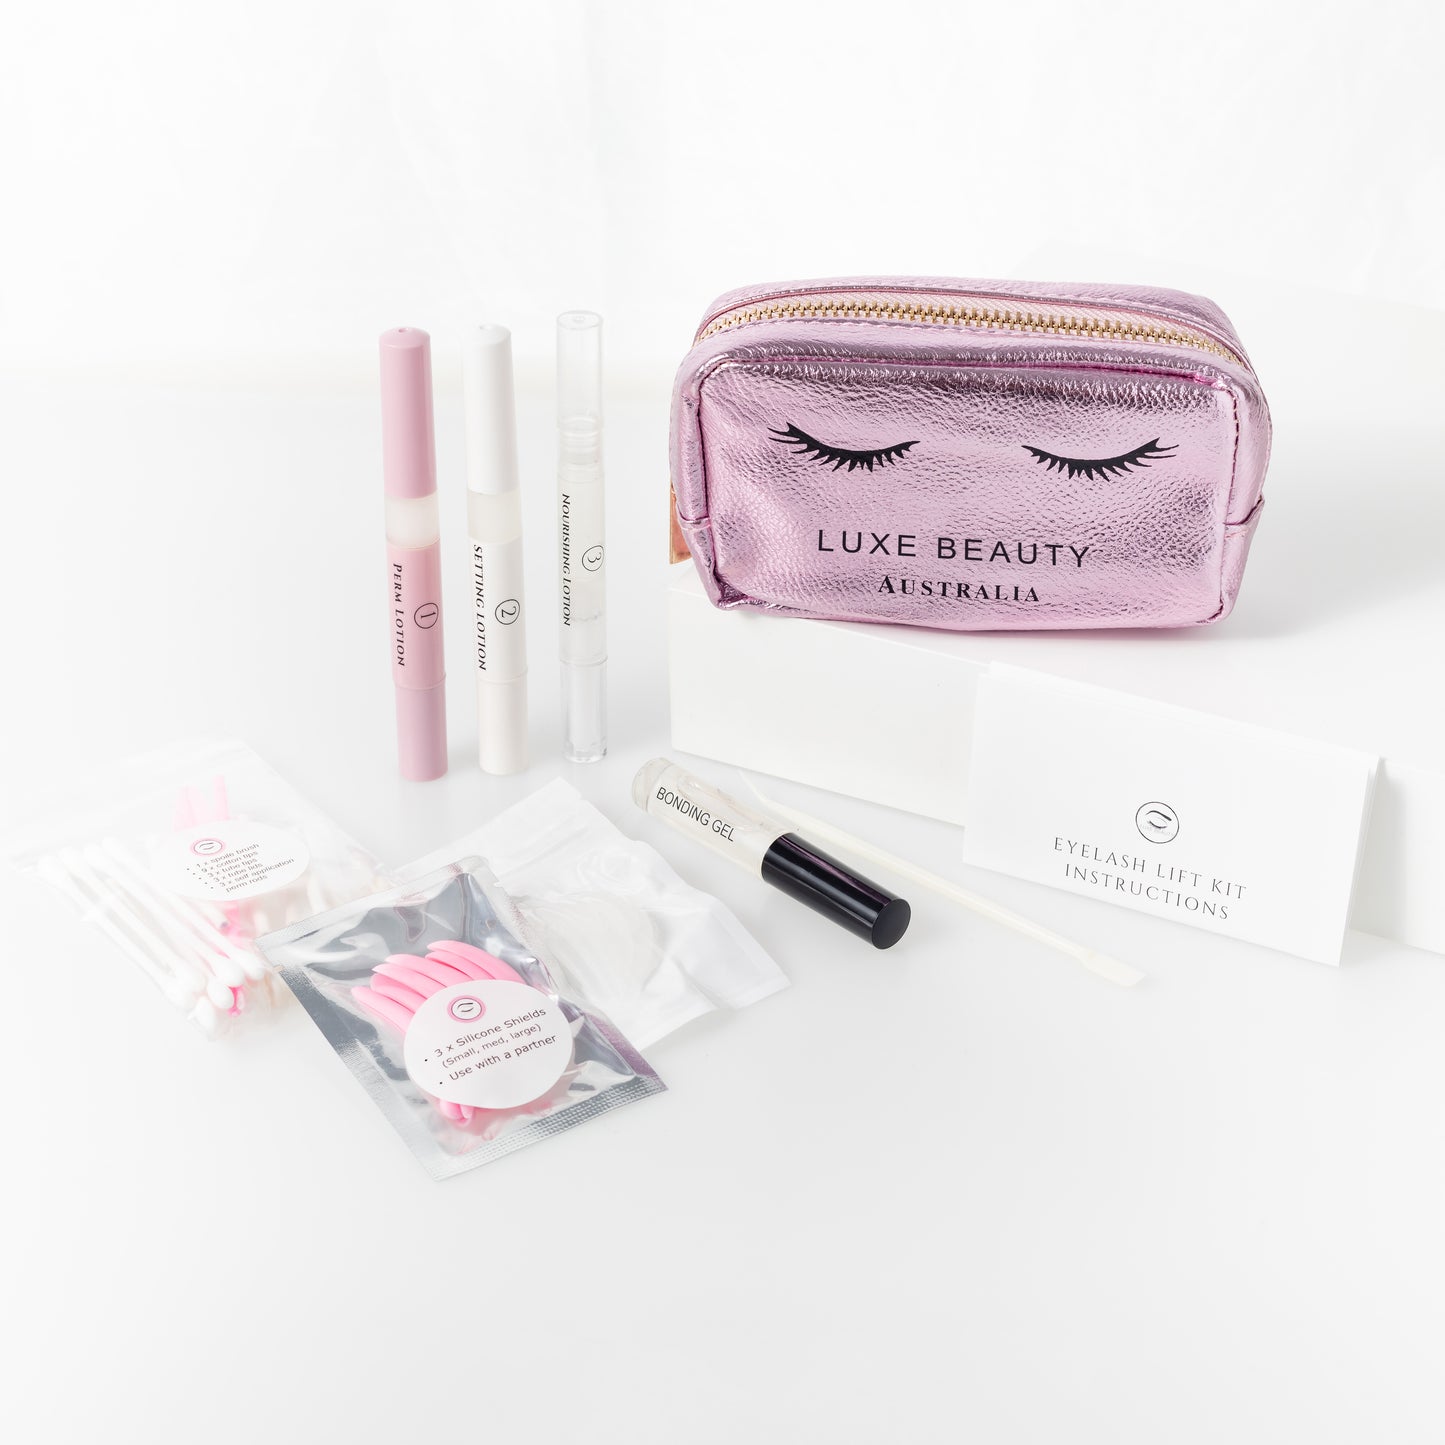 Luxe Beauty Eyelash Lift Kit